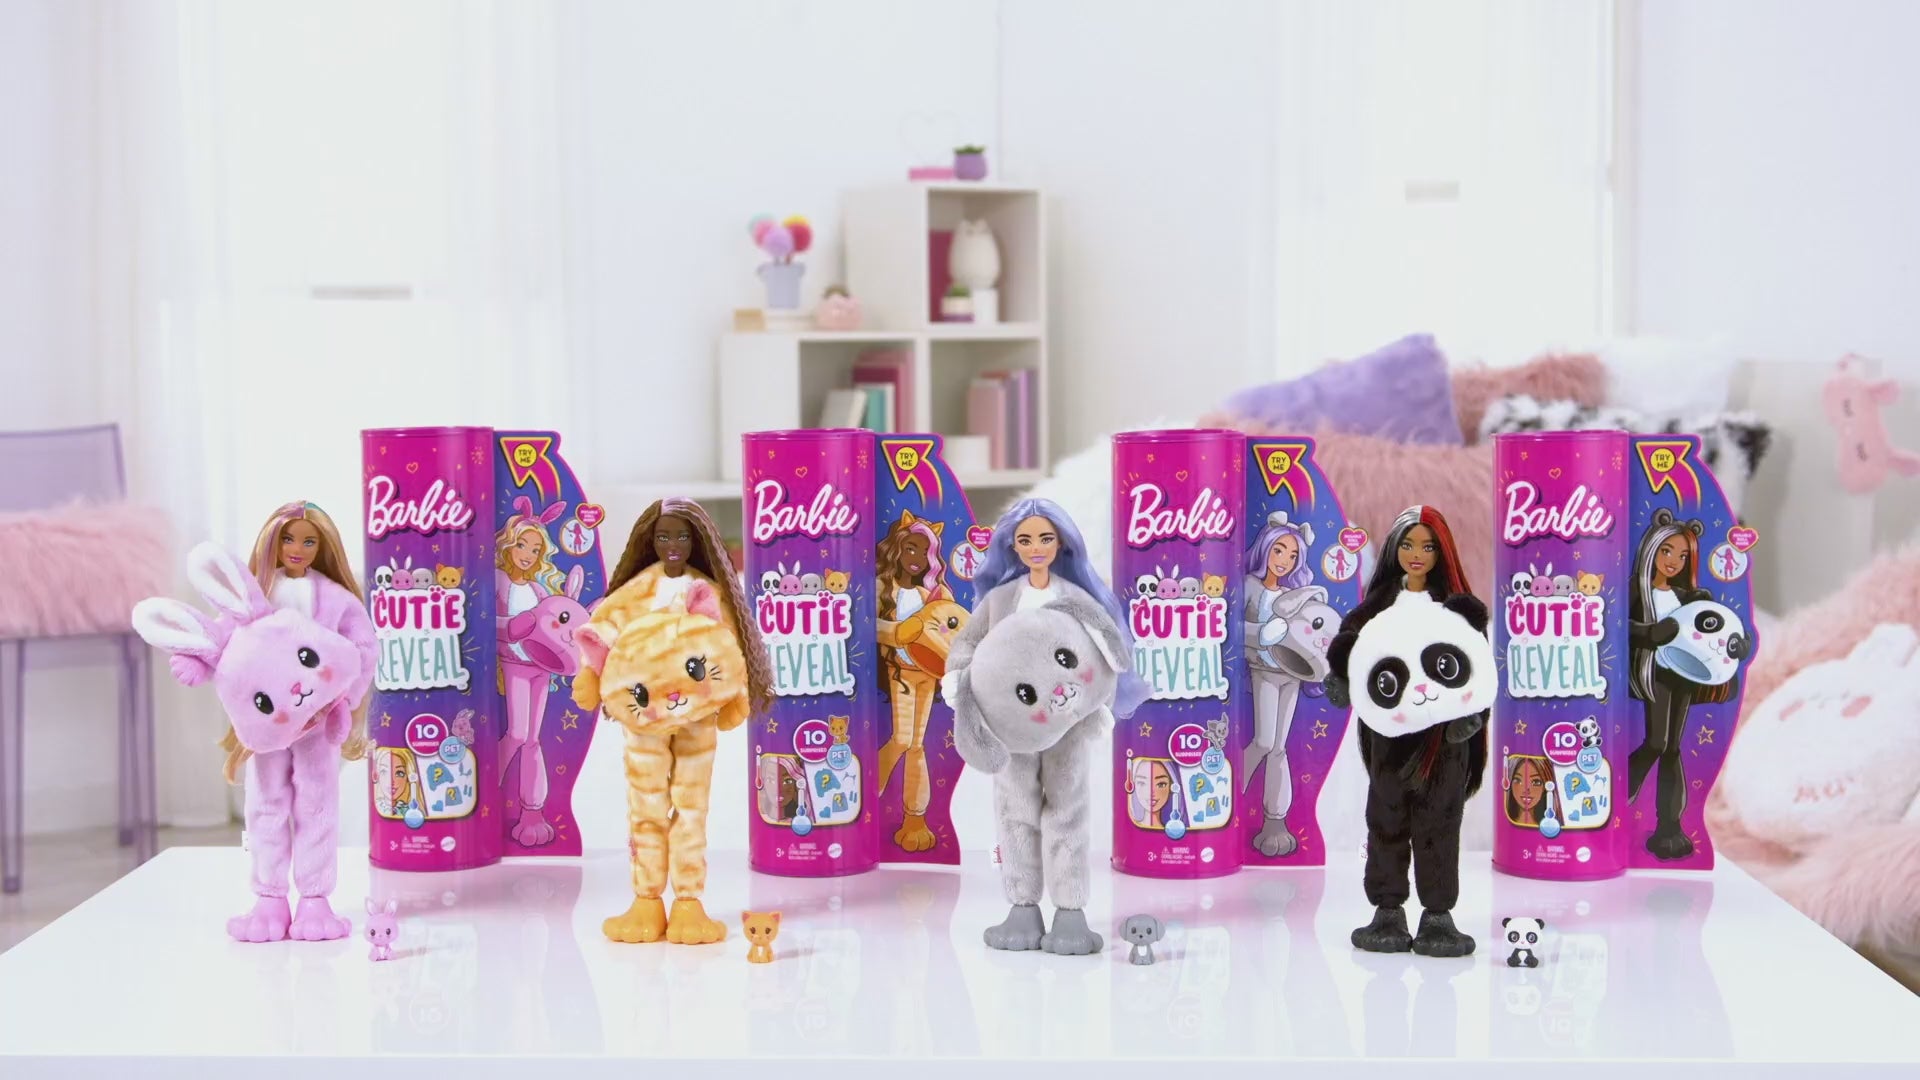 Barbie Cutie Reveal - Muñeca con disfraz de Conejito incluyen minimascota